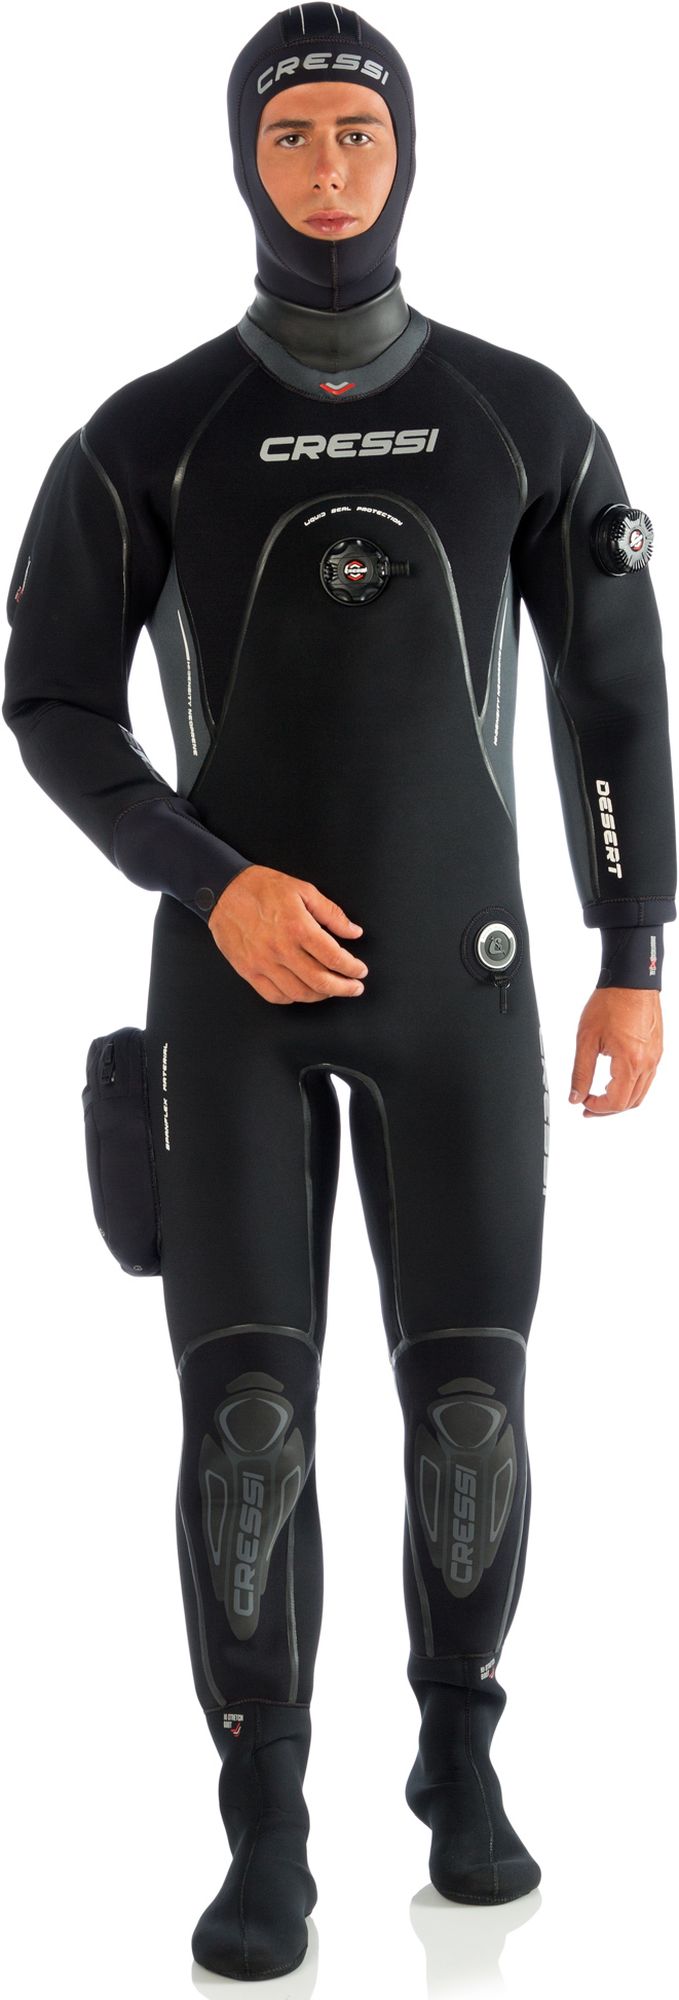 Cressi Desert Drysuit Man muta stagna uomo immersion subacque muta mute Drysuit scuba diving neoprene suit long sleeve drysuit man